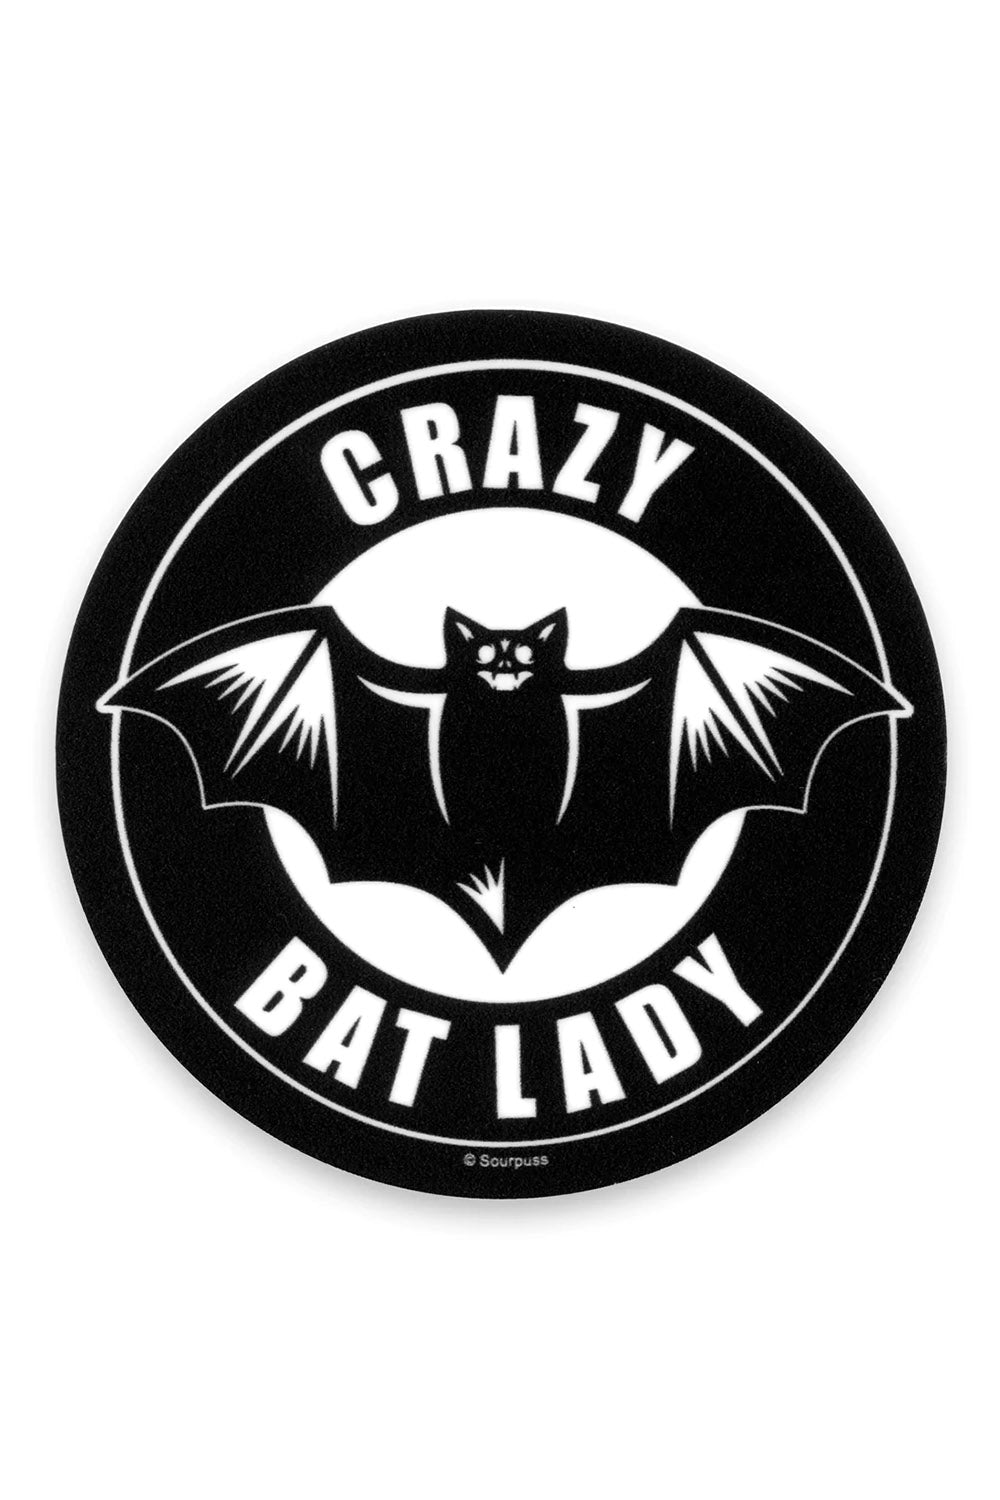 Crazy Bat Lady Sticker